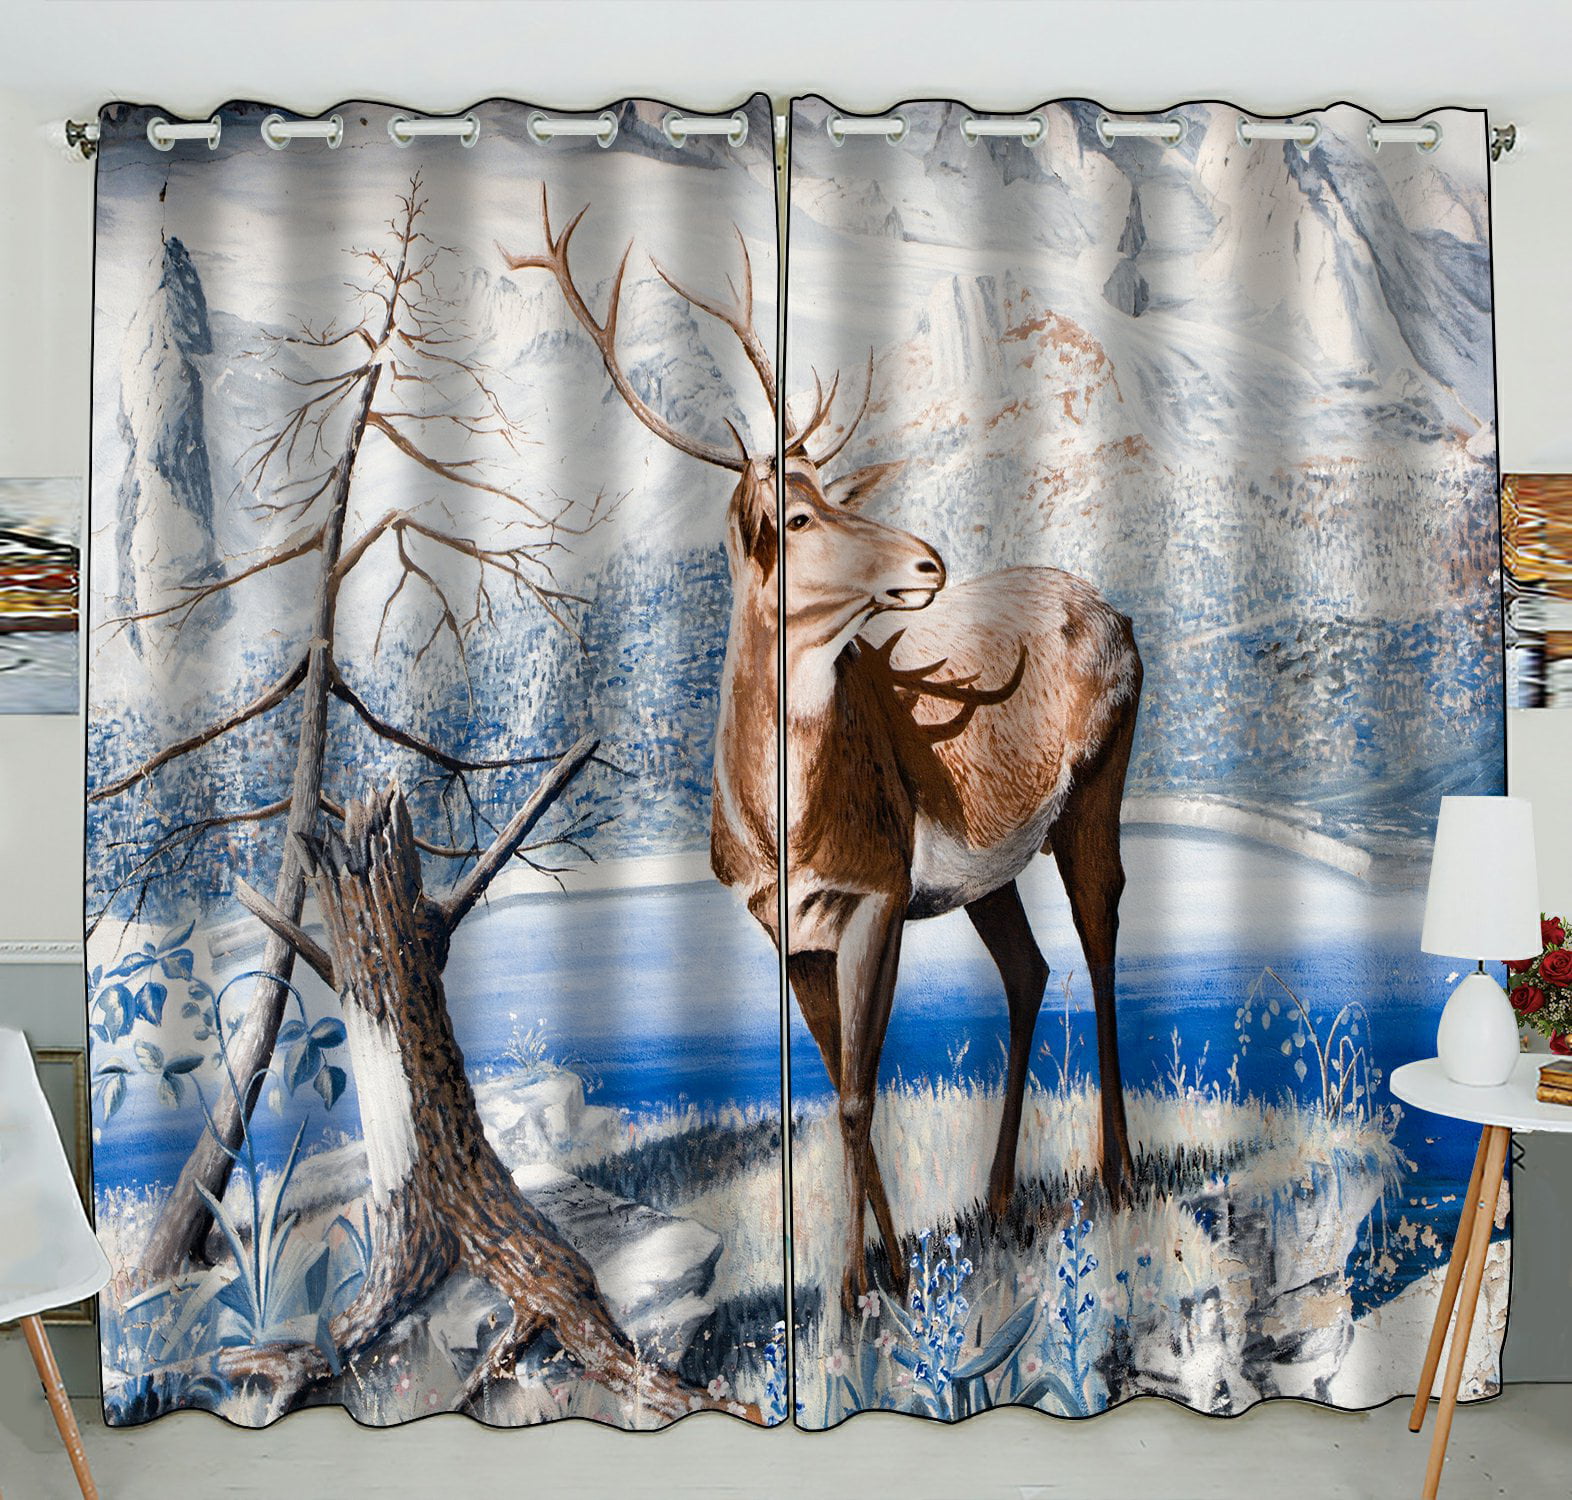 River's Edge Deer Antler Curtain Tieback Hooks 1 Pack Home Window Decor New 